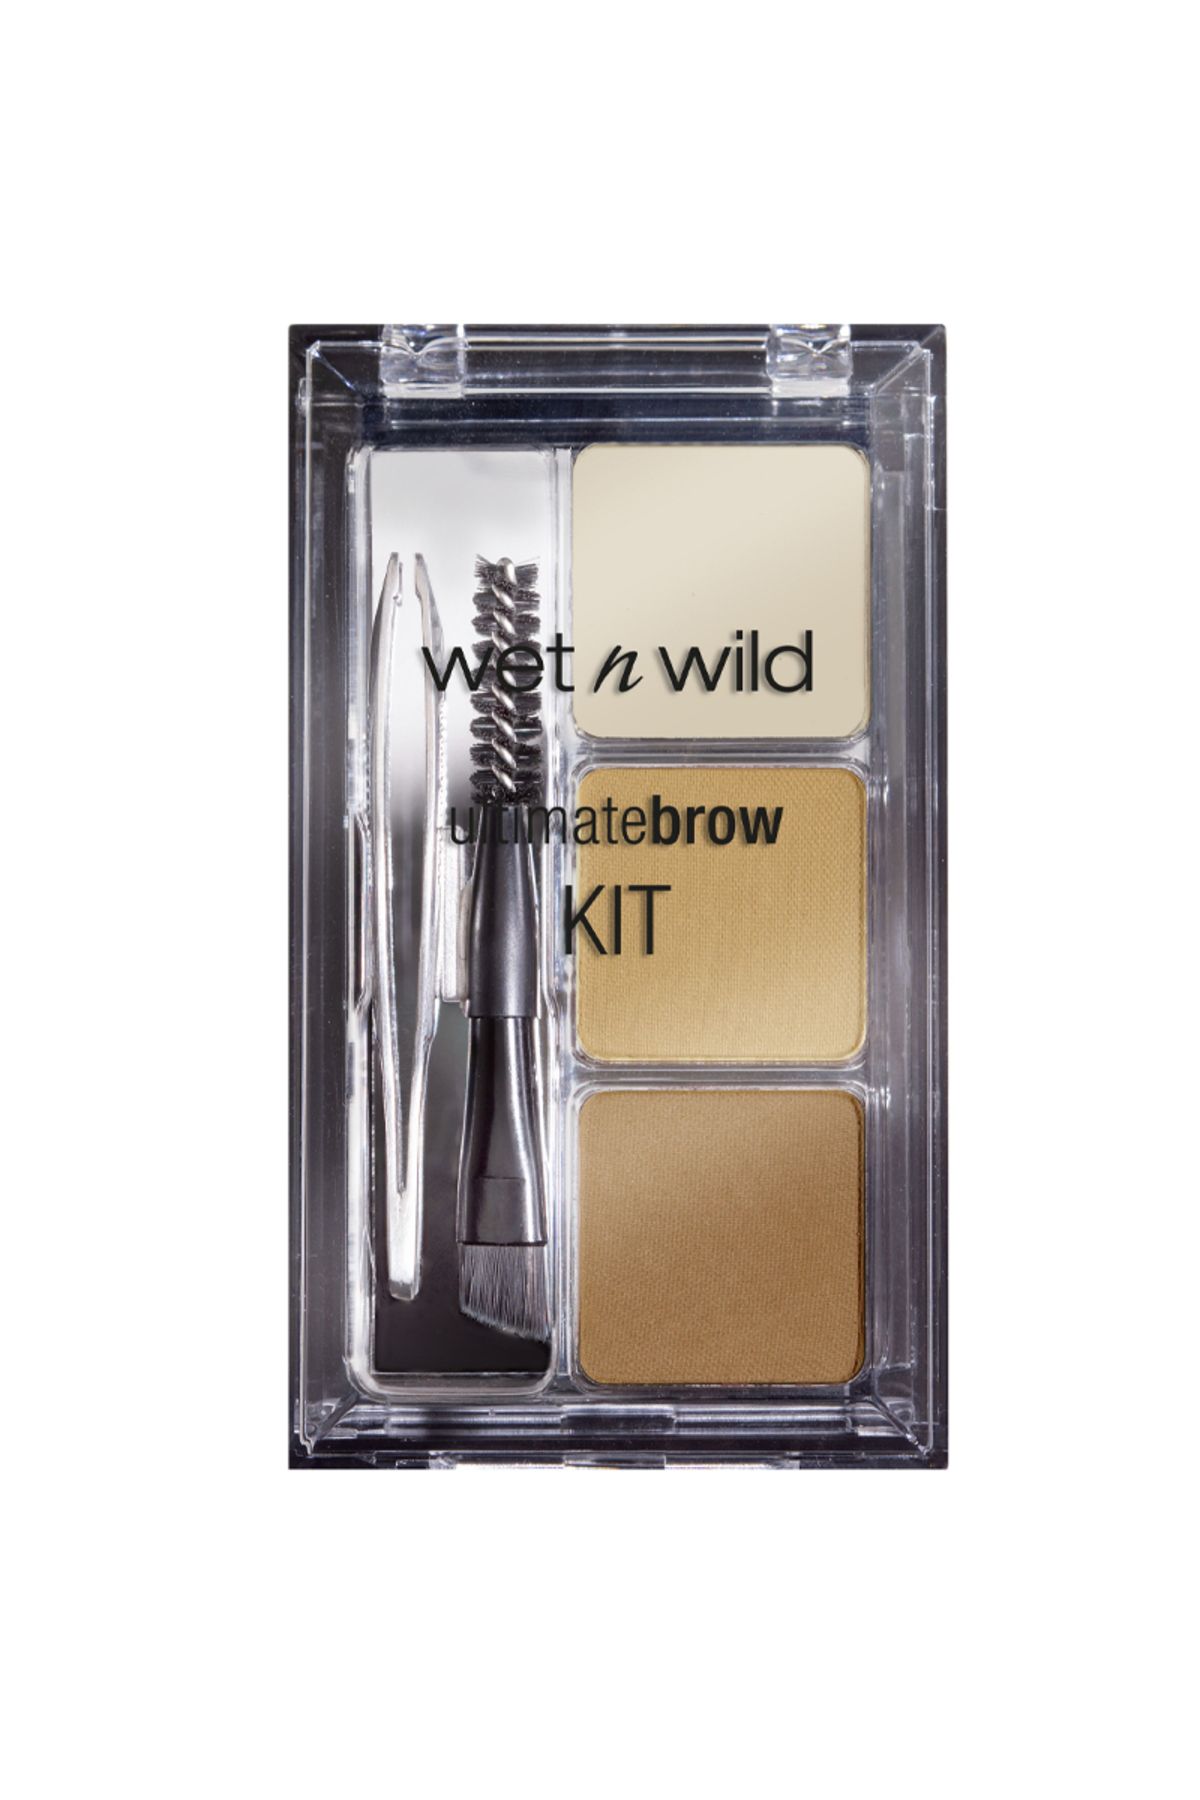 WET N WİLD wet n wild Ultimate Brow Kit Kaş Far Kiti - Soft Brown